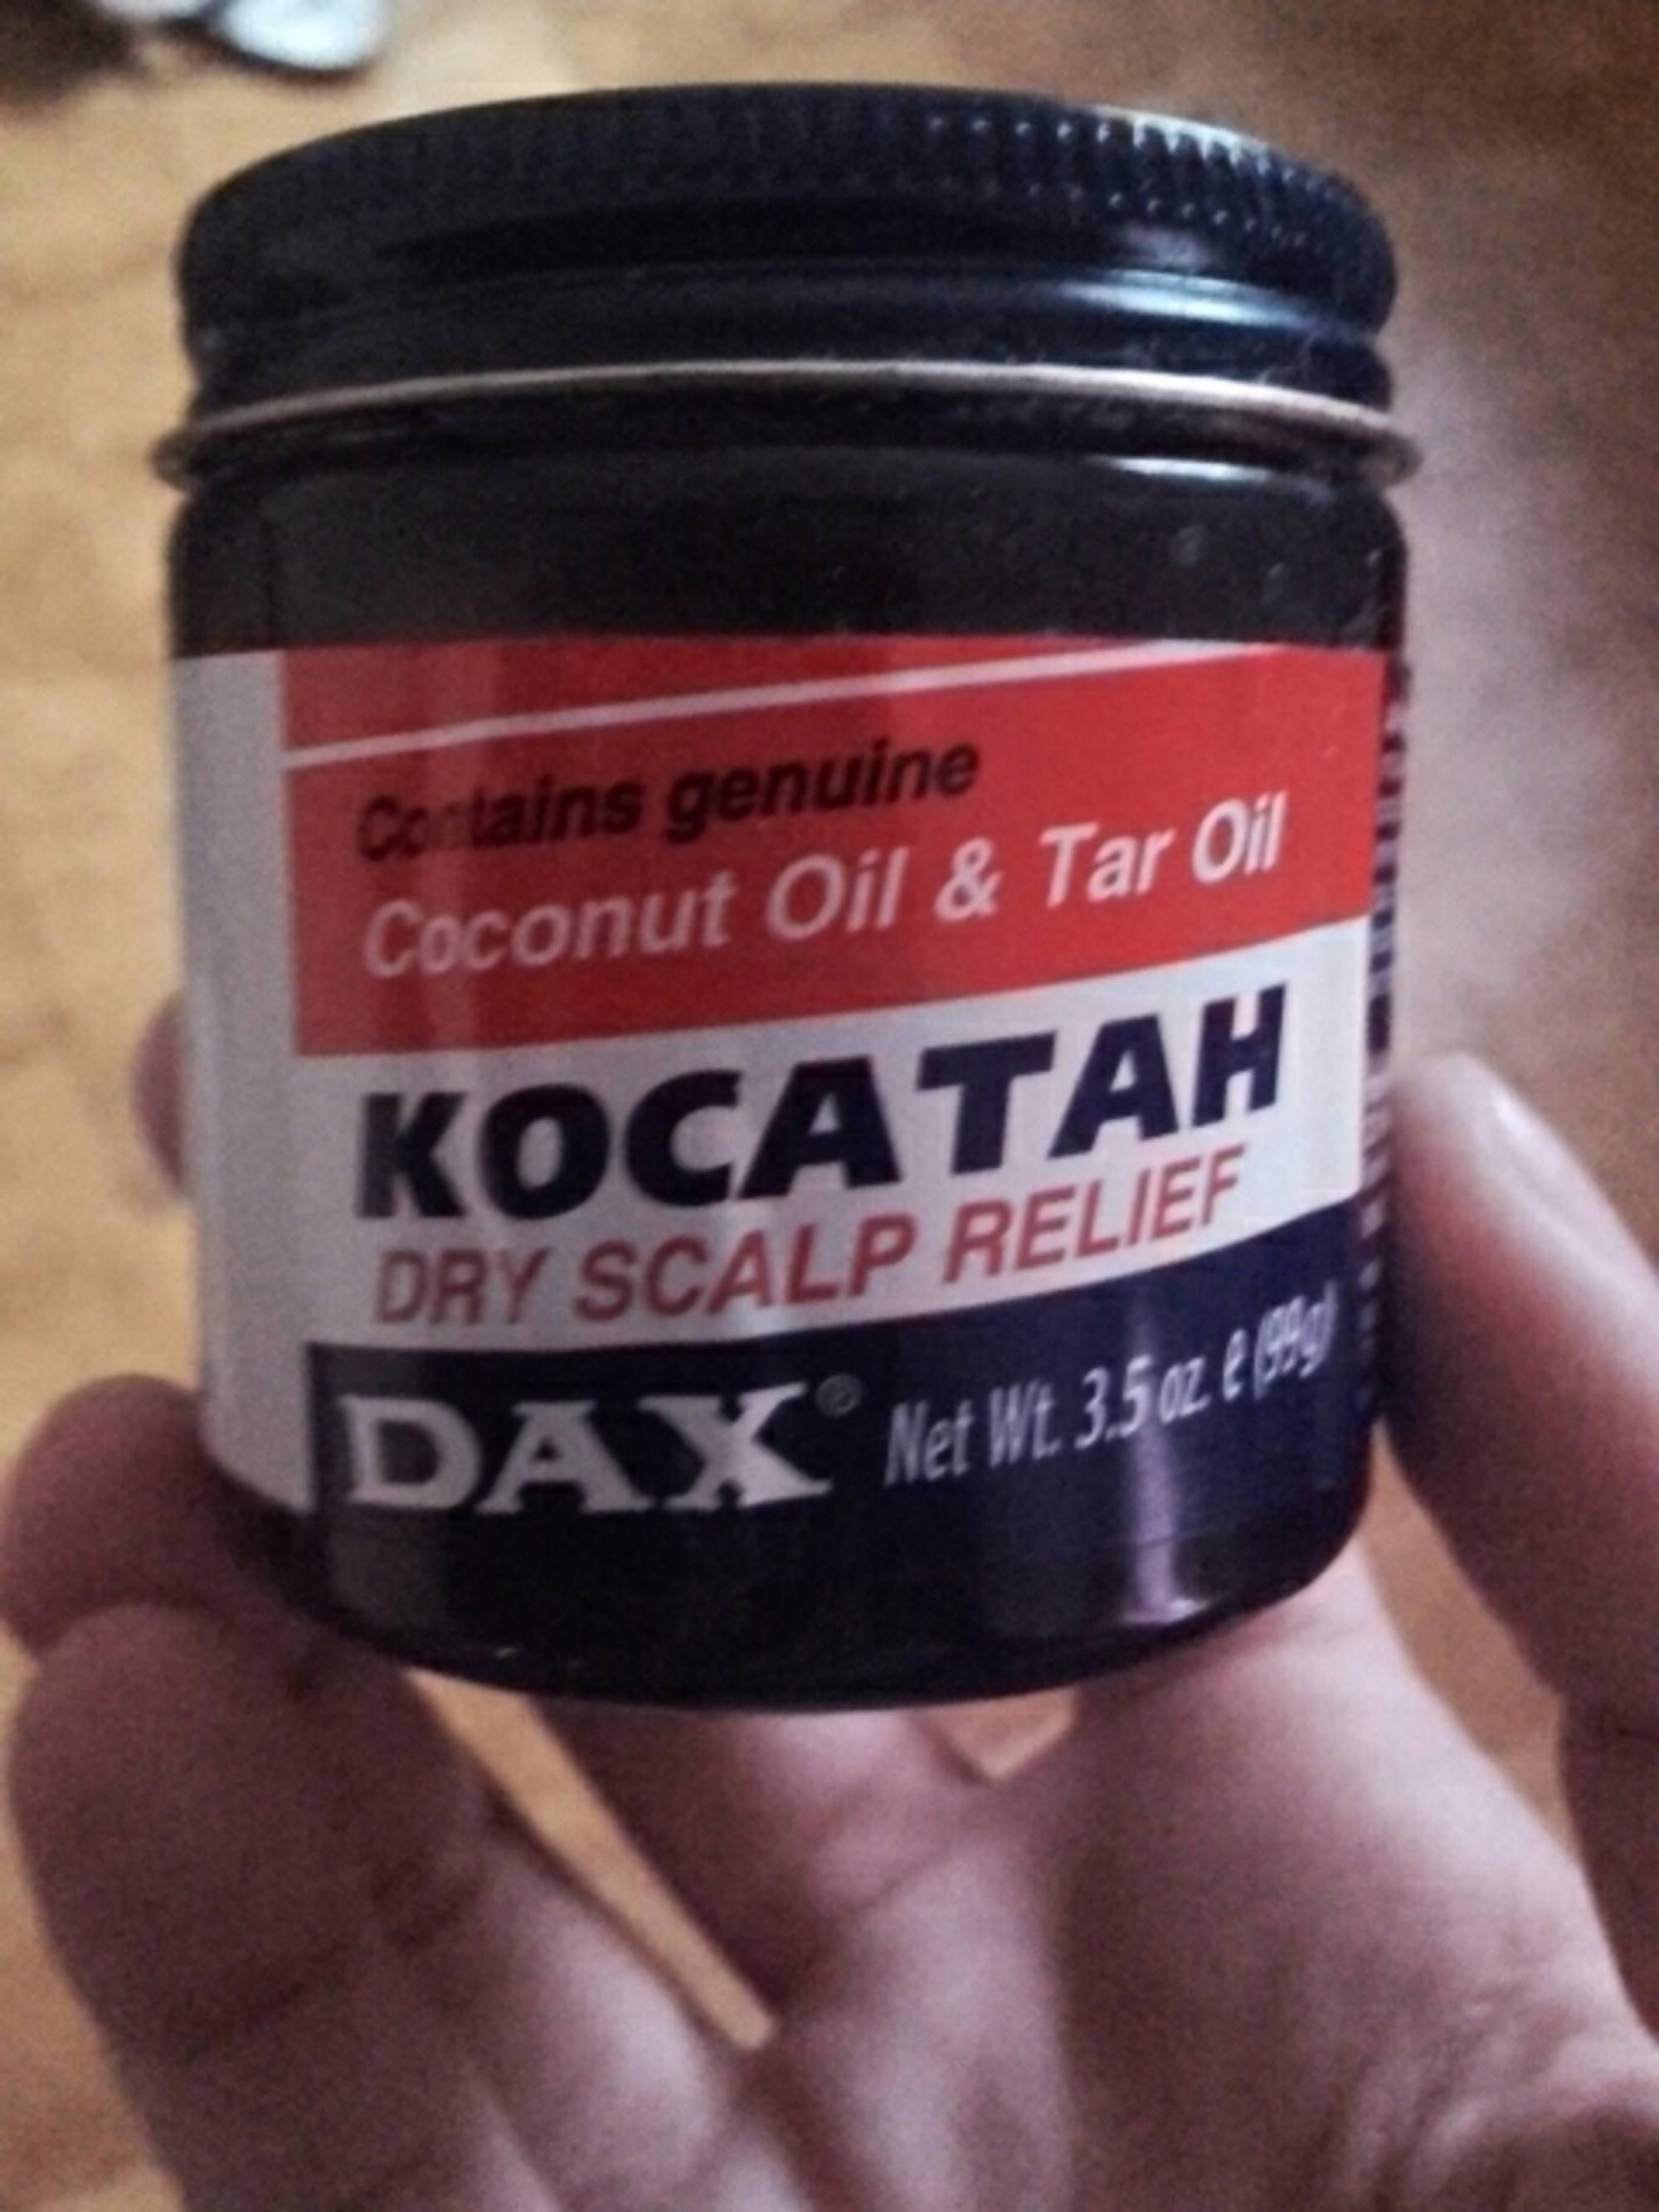 DAX - Kocatah dry scalp relief - Coconut oil & tar oil